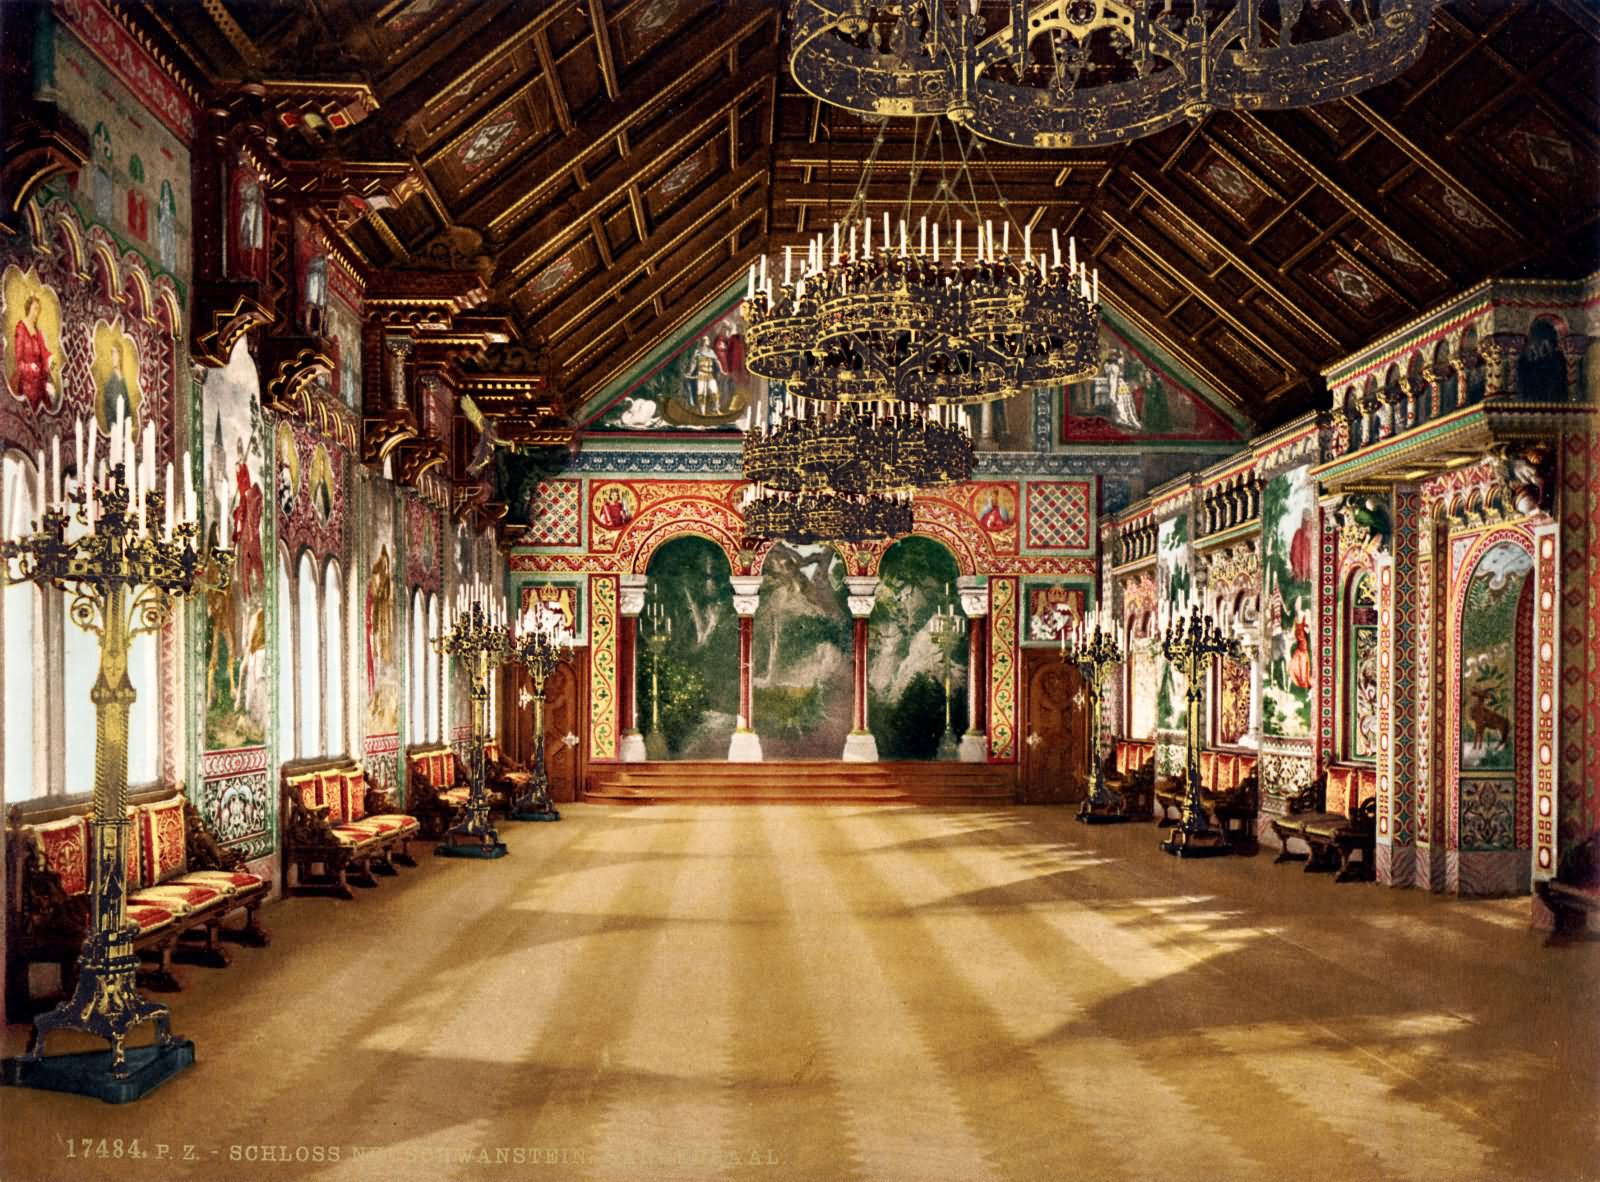 Hall Of The Singers Inside The Neuschwanstein Castle